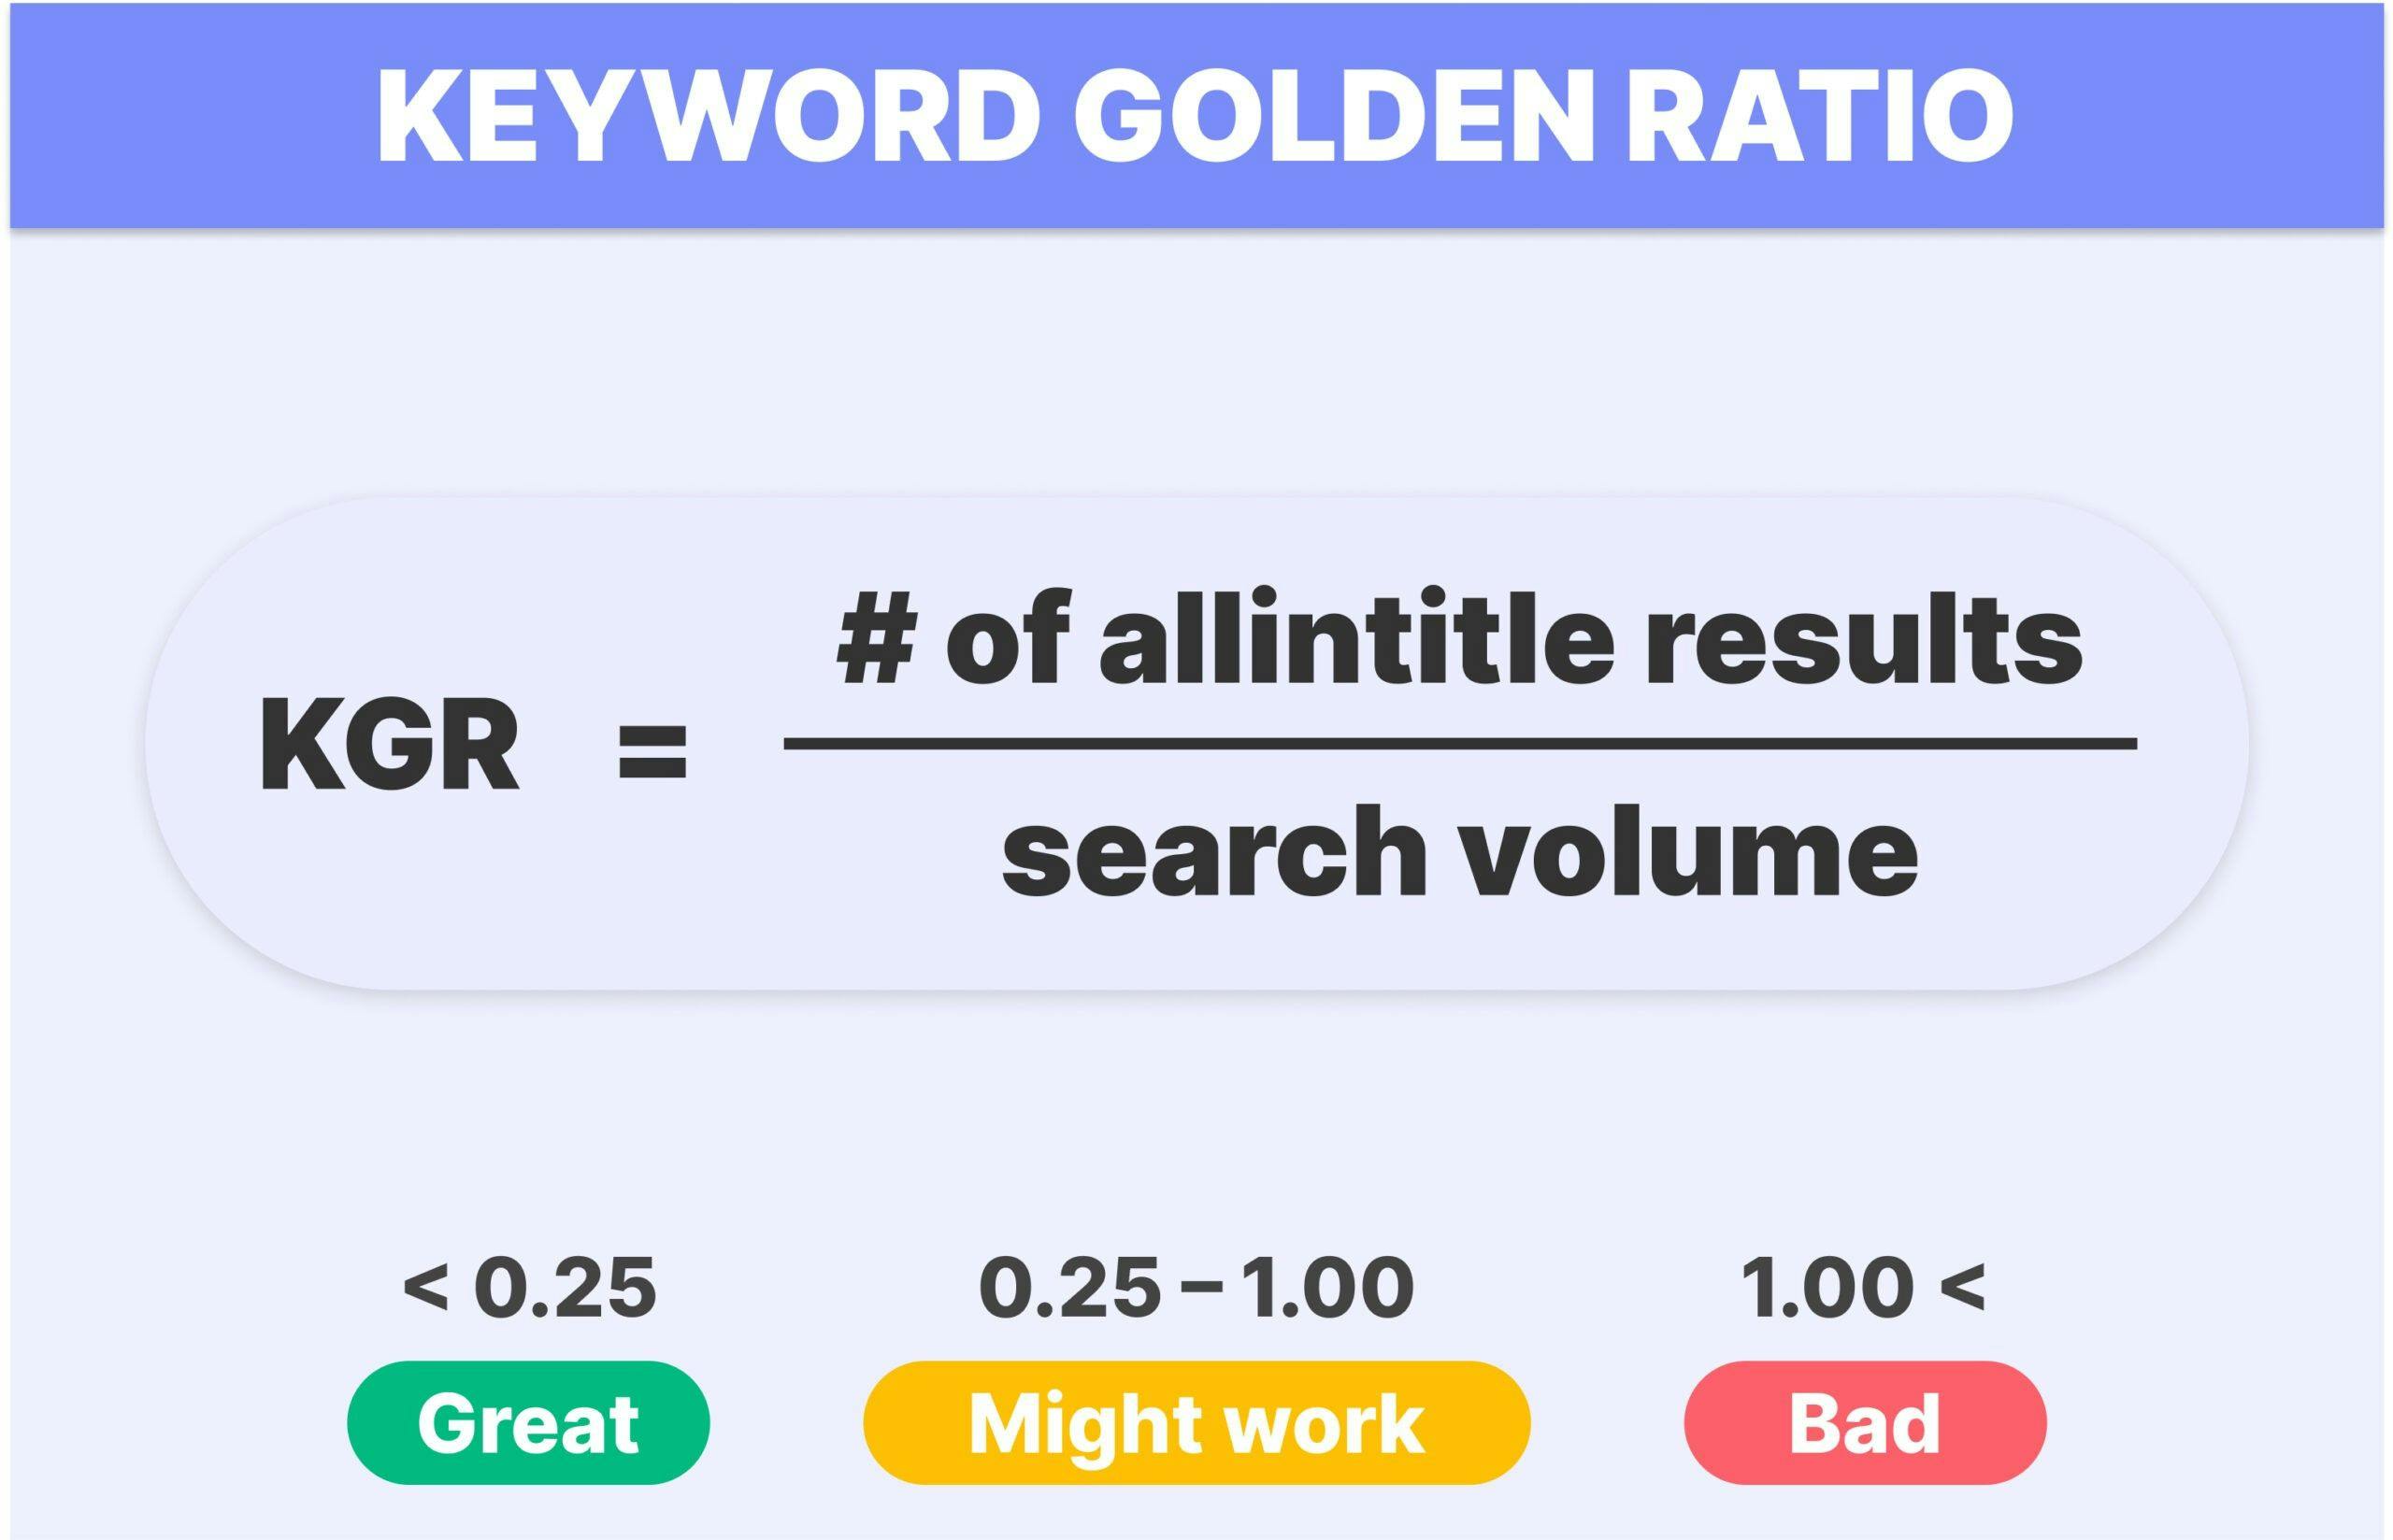 Keyword-Golden-ratio-scaled.jpg